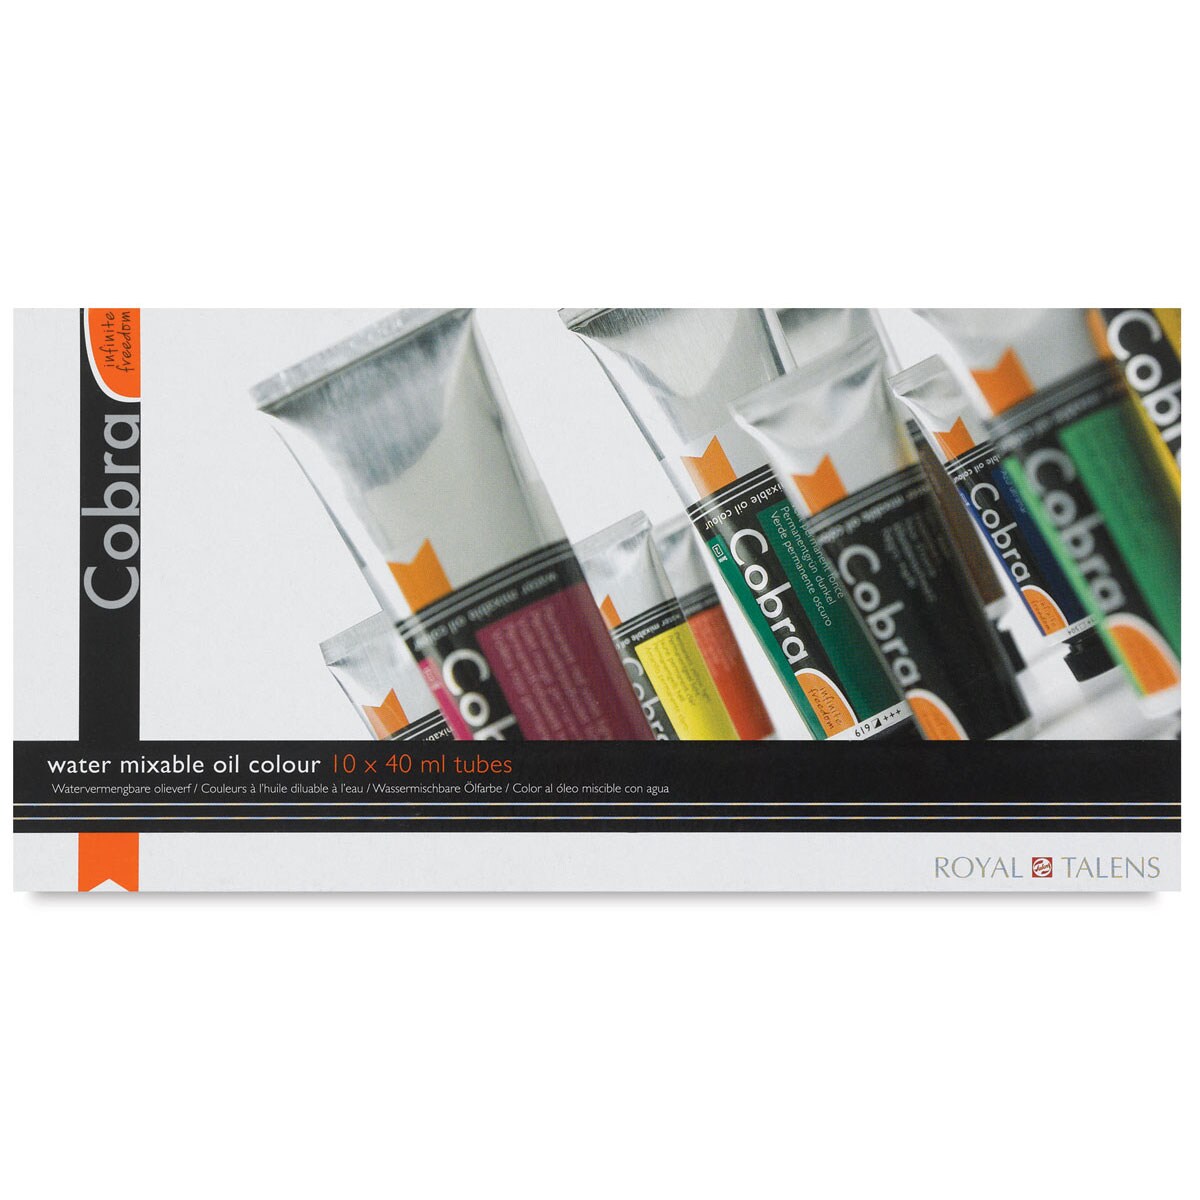 Cobra Water Mixable Oils – Opus Art Supplies